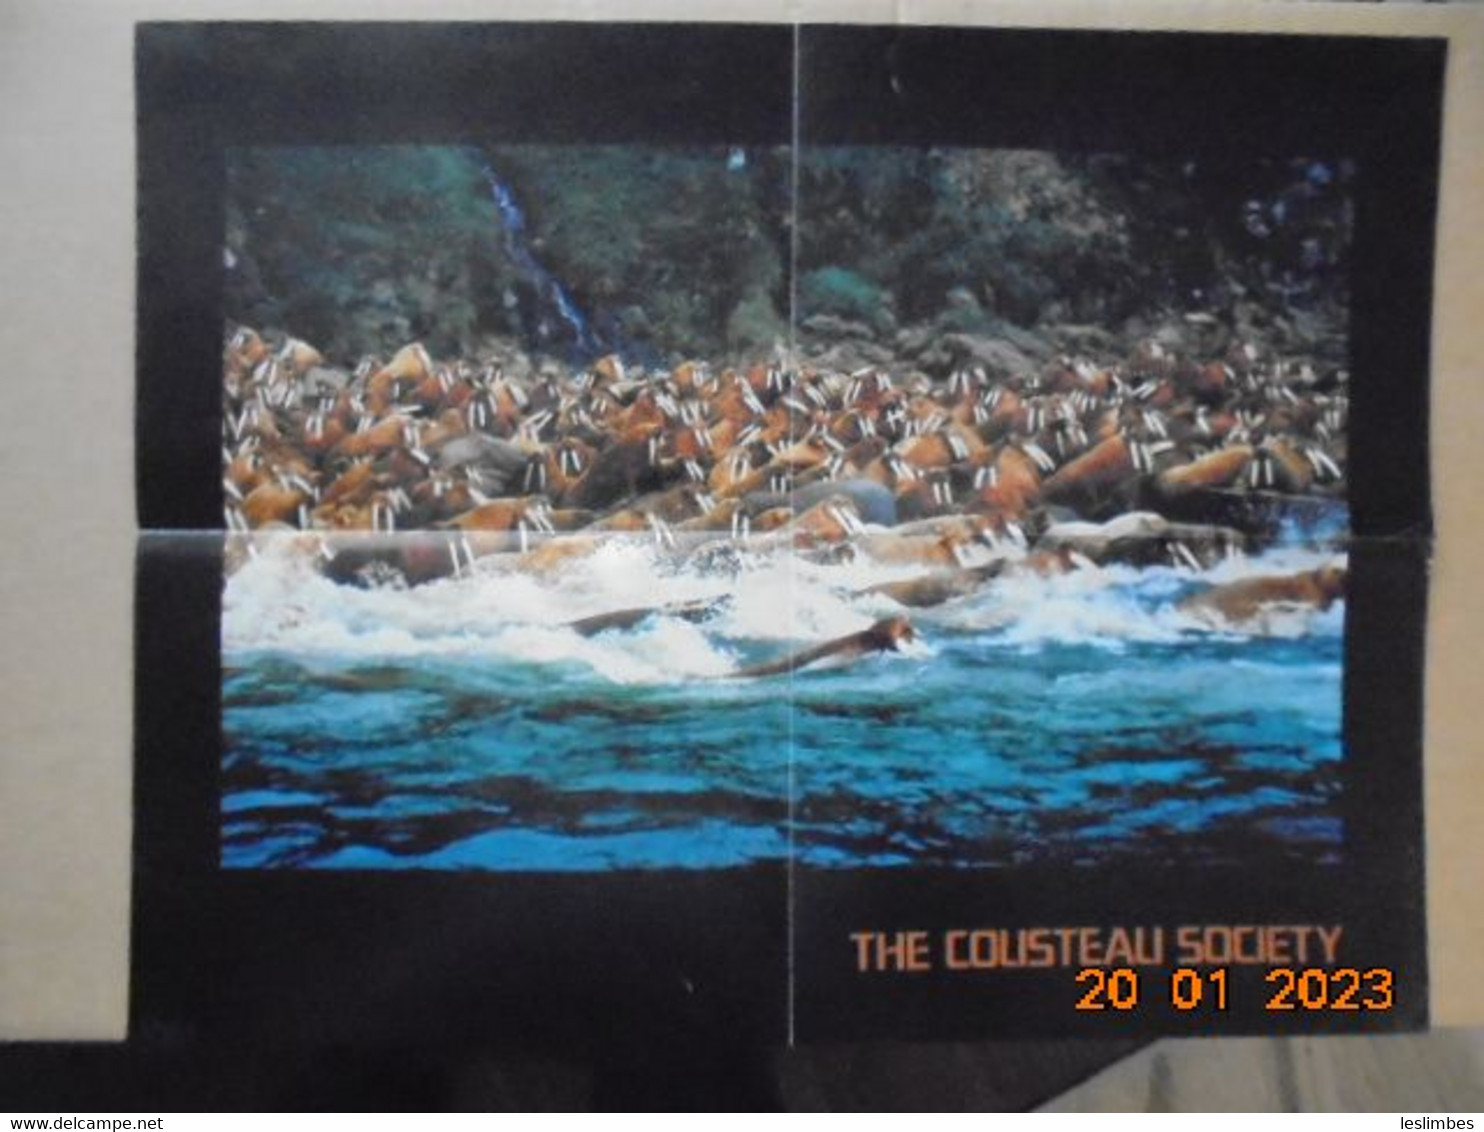 Cousteau Society Bulletin Et Affiche En Anglais : Calypso Log, Volume 3, Number 6 (November - December 1976) - Nature